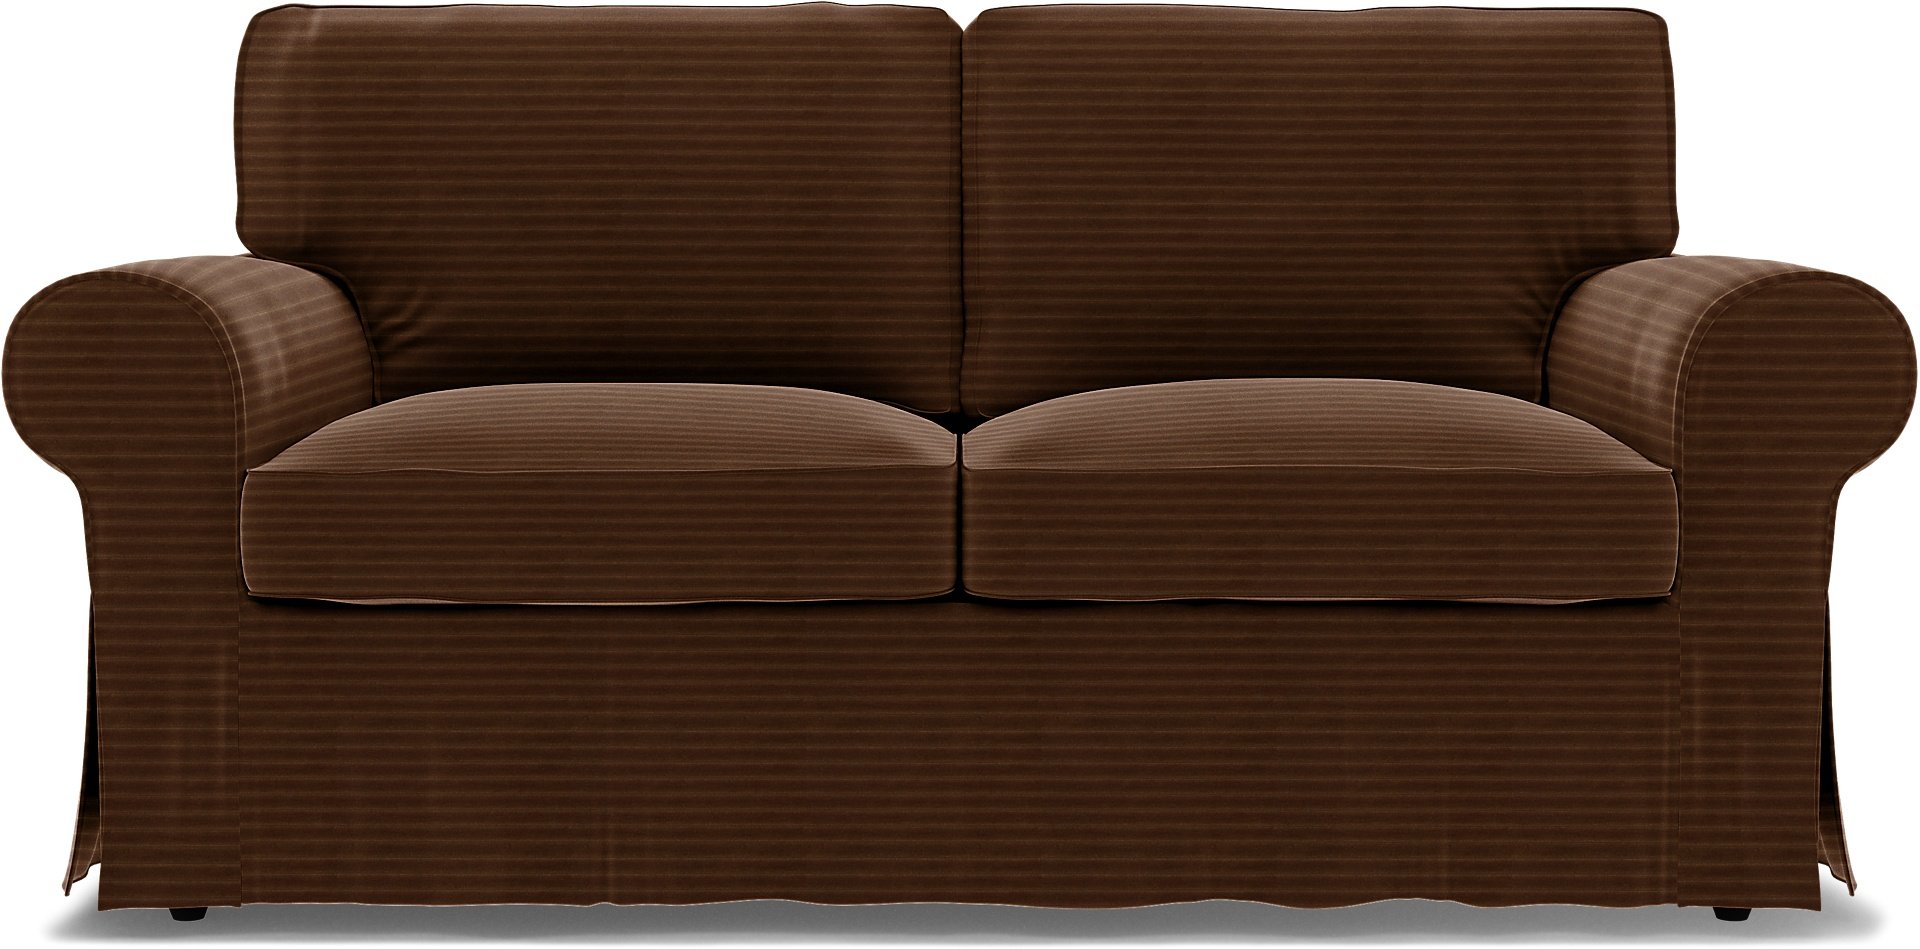 IKEA - Ektorp 2 Seater Sofa Bed Cover, Chocolate Brown, Corduroy - Bemz